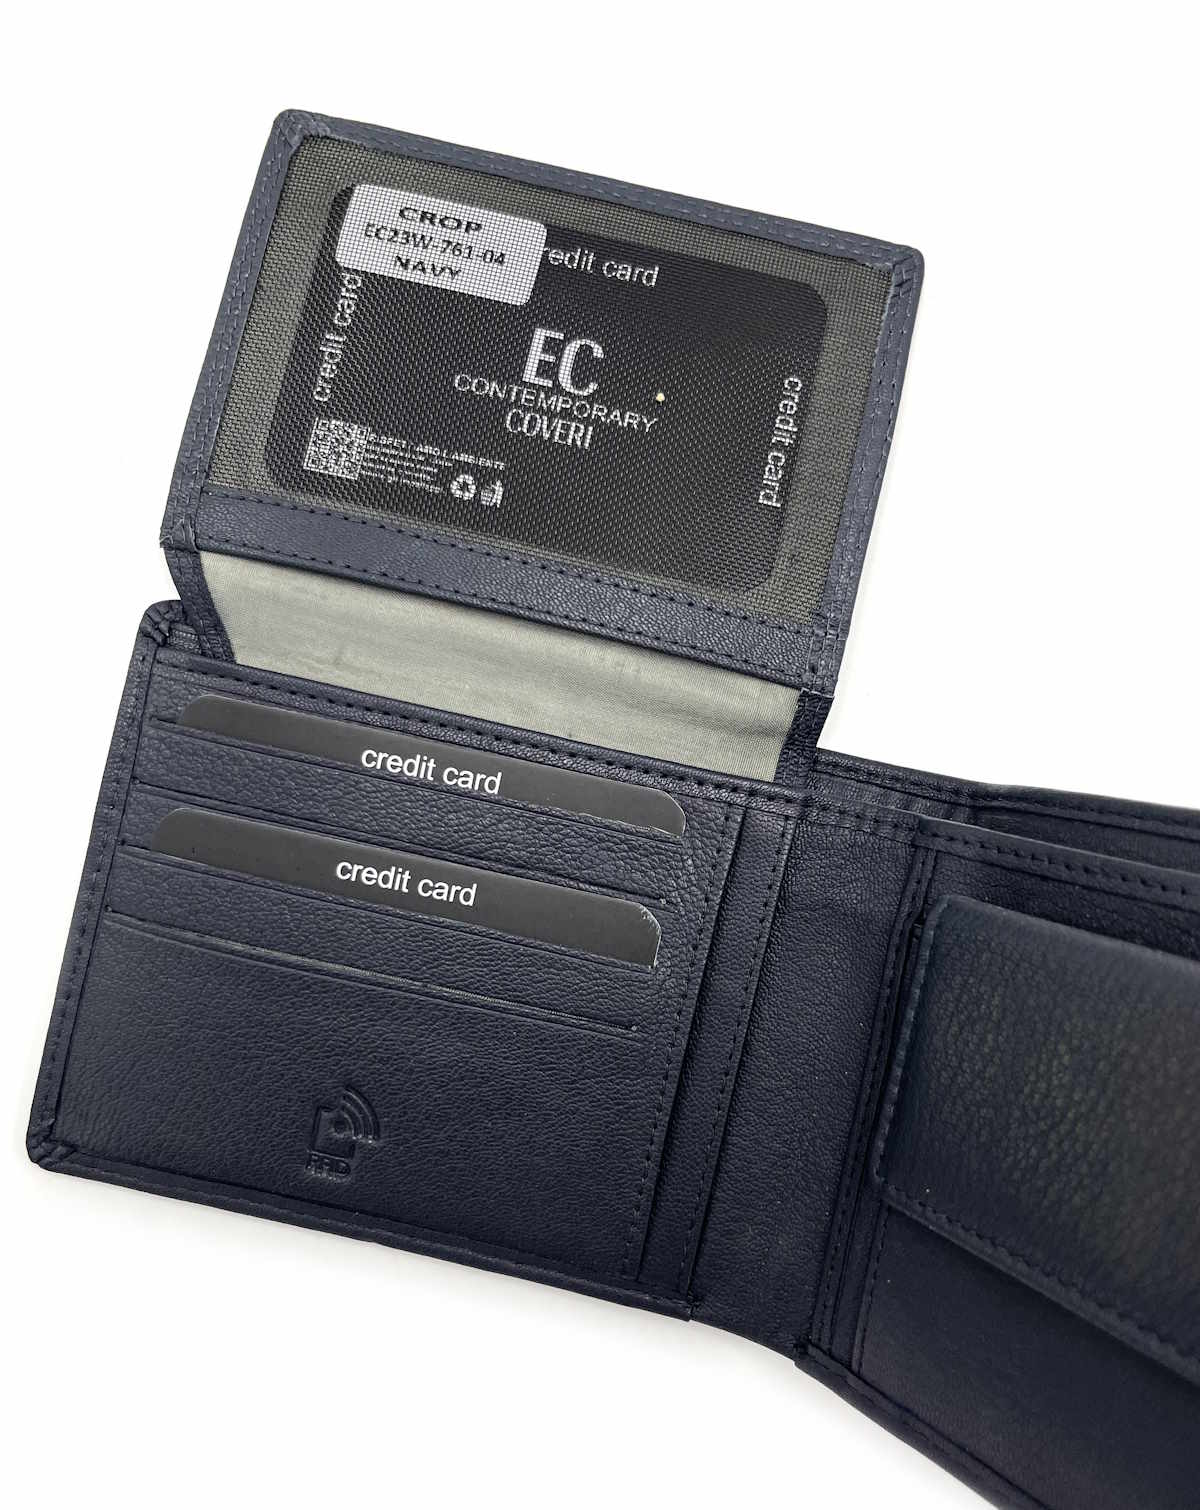 Genuine leather Wallet, Brand EC COVERI, art. EC23761-04